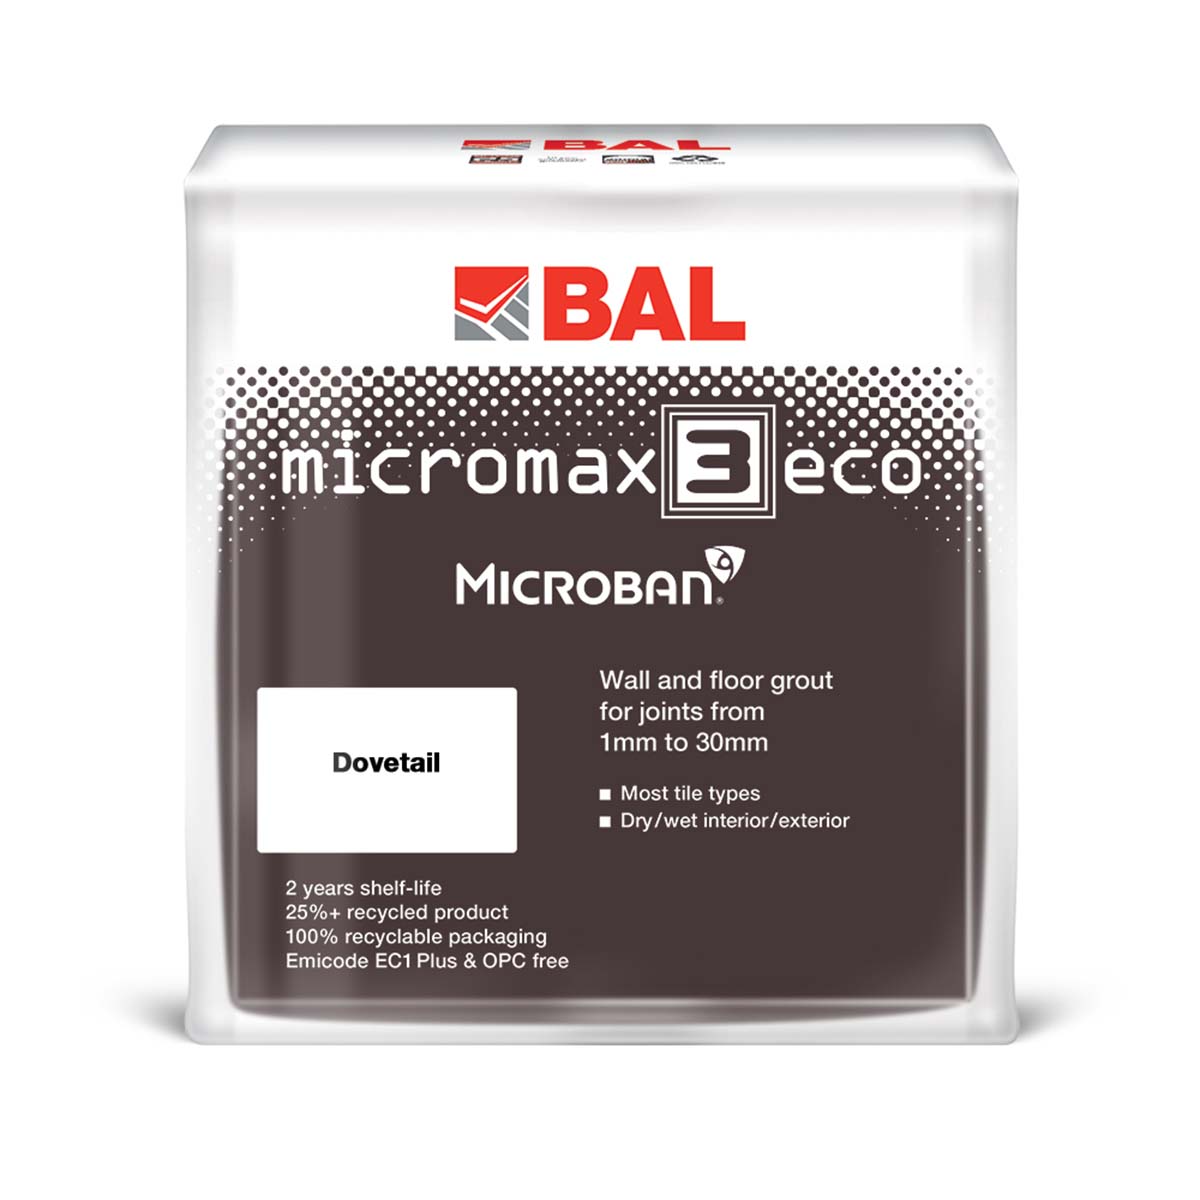 BAL micromax 3 eco wall and floor tile adhesive dovetail